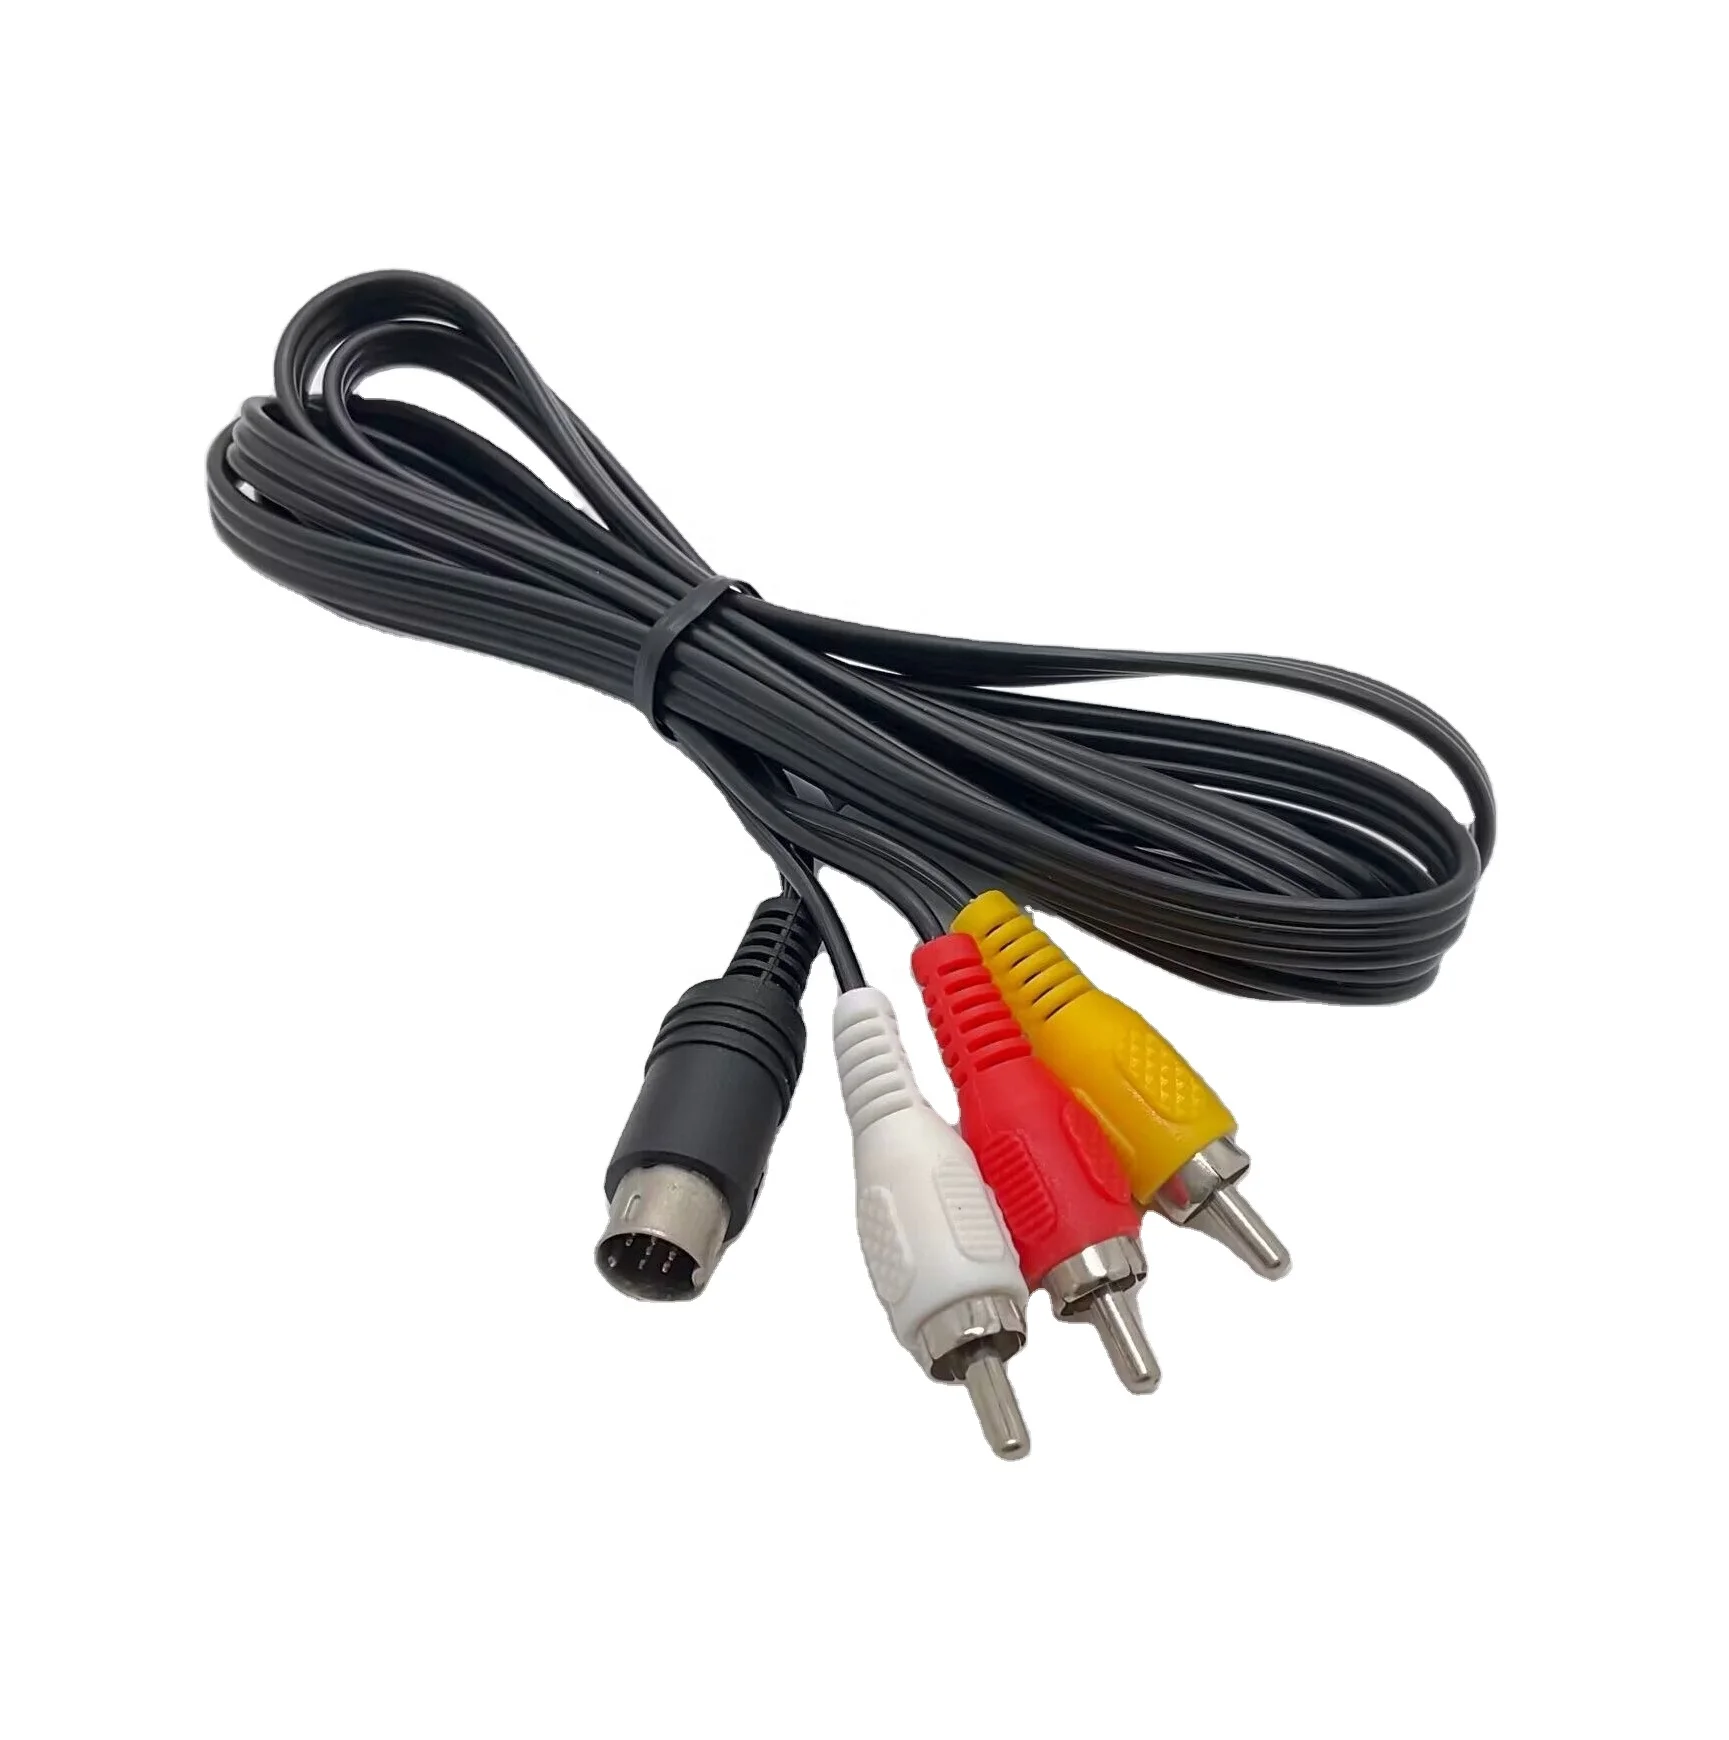 

TV AV Cable for Sega Mega Drive RCA Cable for Sega MegaDrive 2/3 for Sega Genesis 2/3 Console Adaptor Lead Cord 1.8M